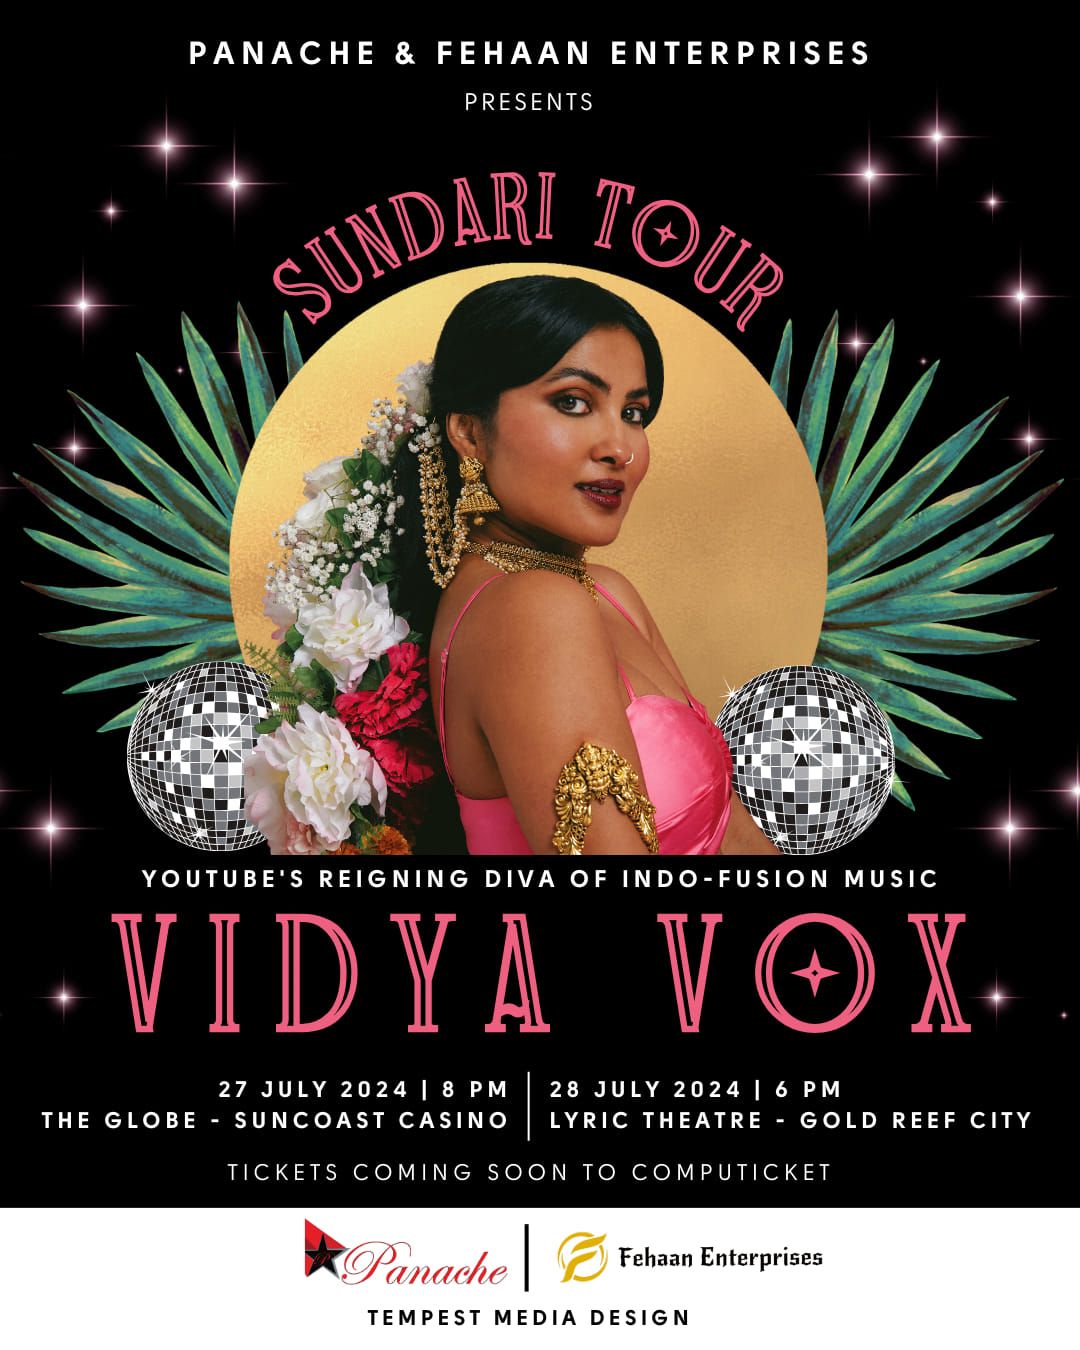 Vidya Vox live with her Sundari Tour